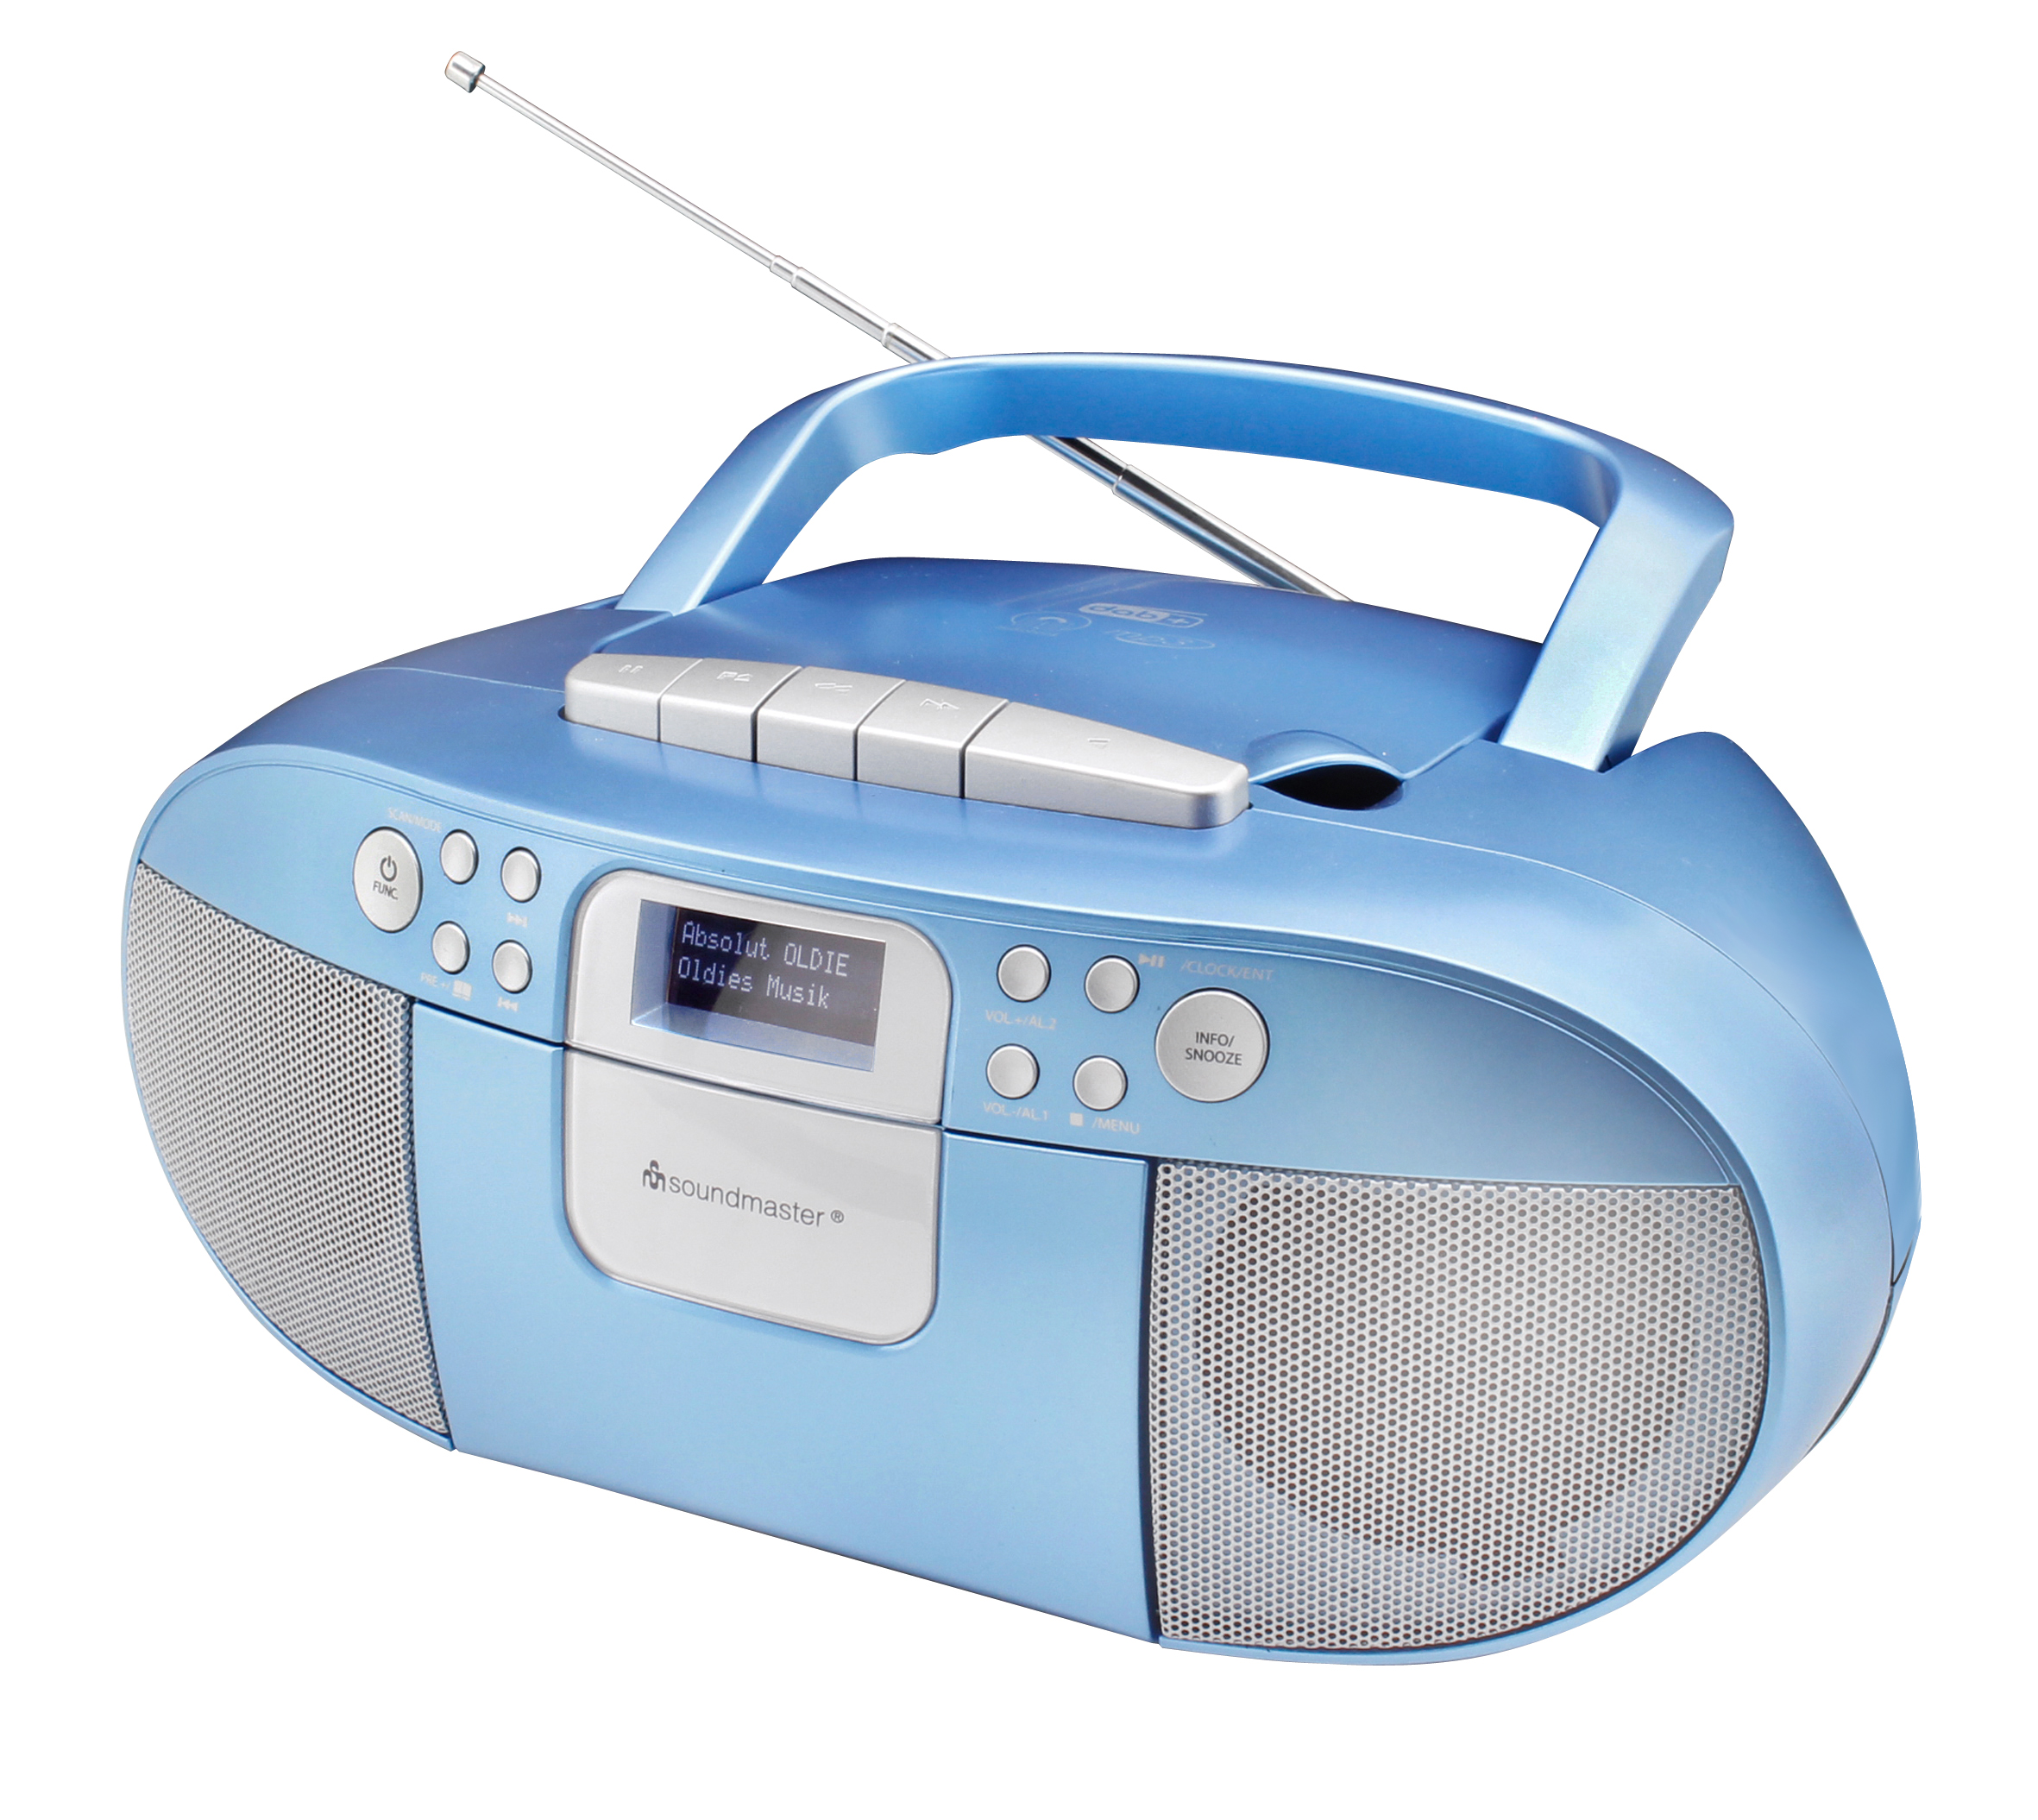 CD/MP3 Boombox with DAB+/FM radio, player, USB | www.soundmaster.de